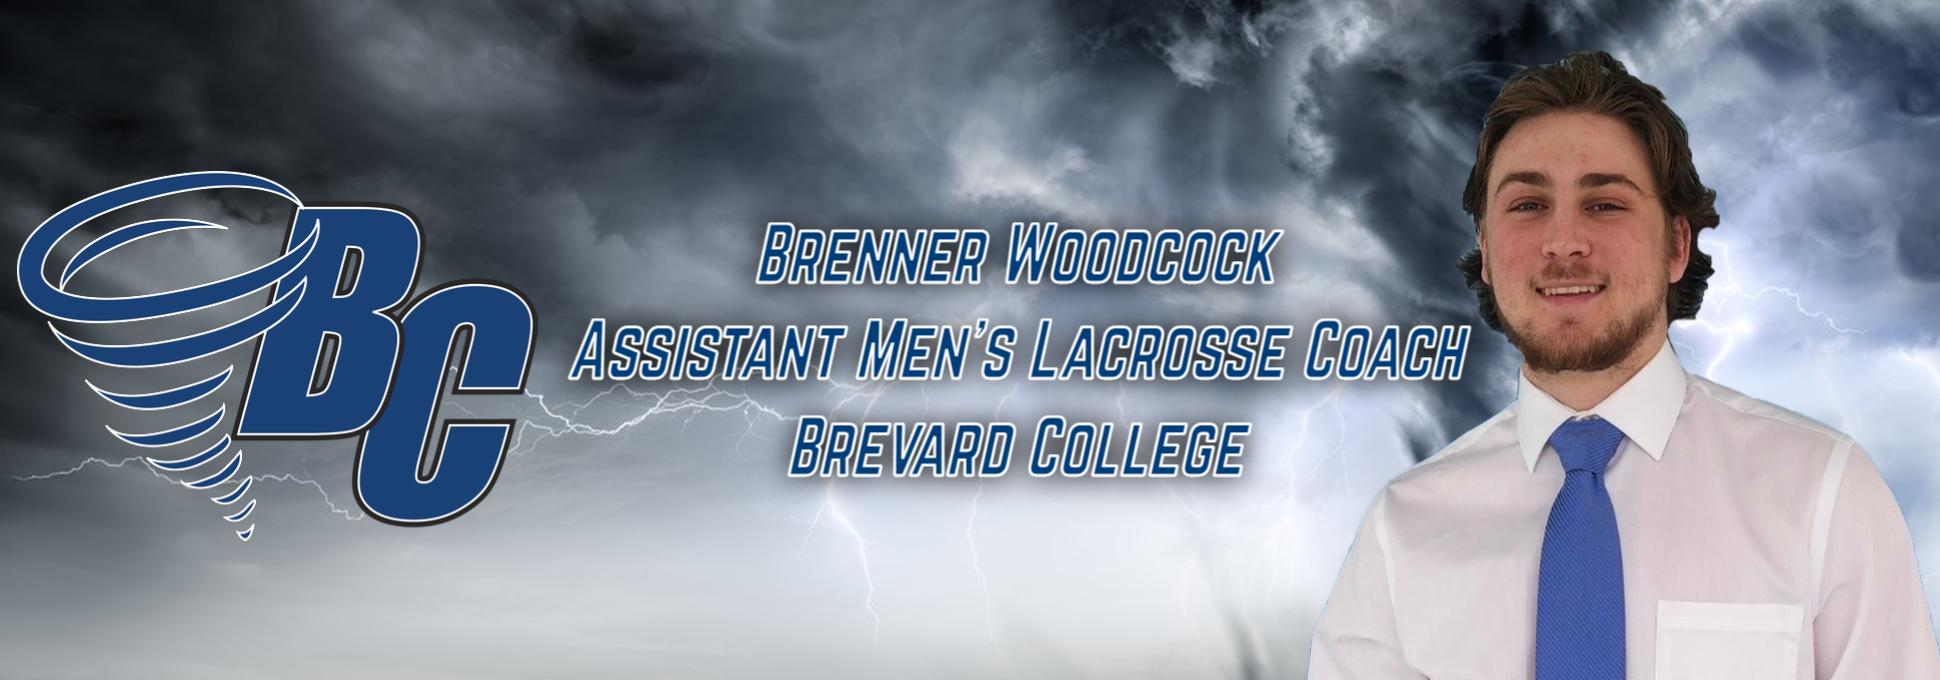 Brenner Woodcock Named Brevard College Assistant Men’s Lacrosse Coach